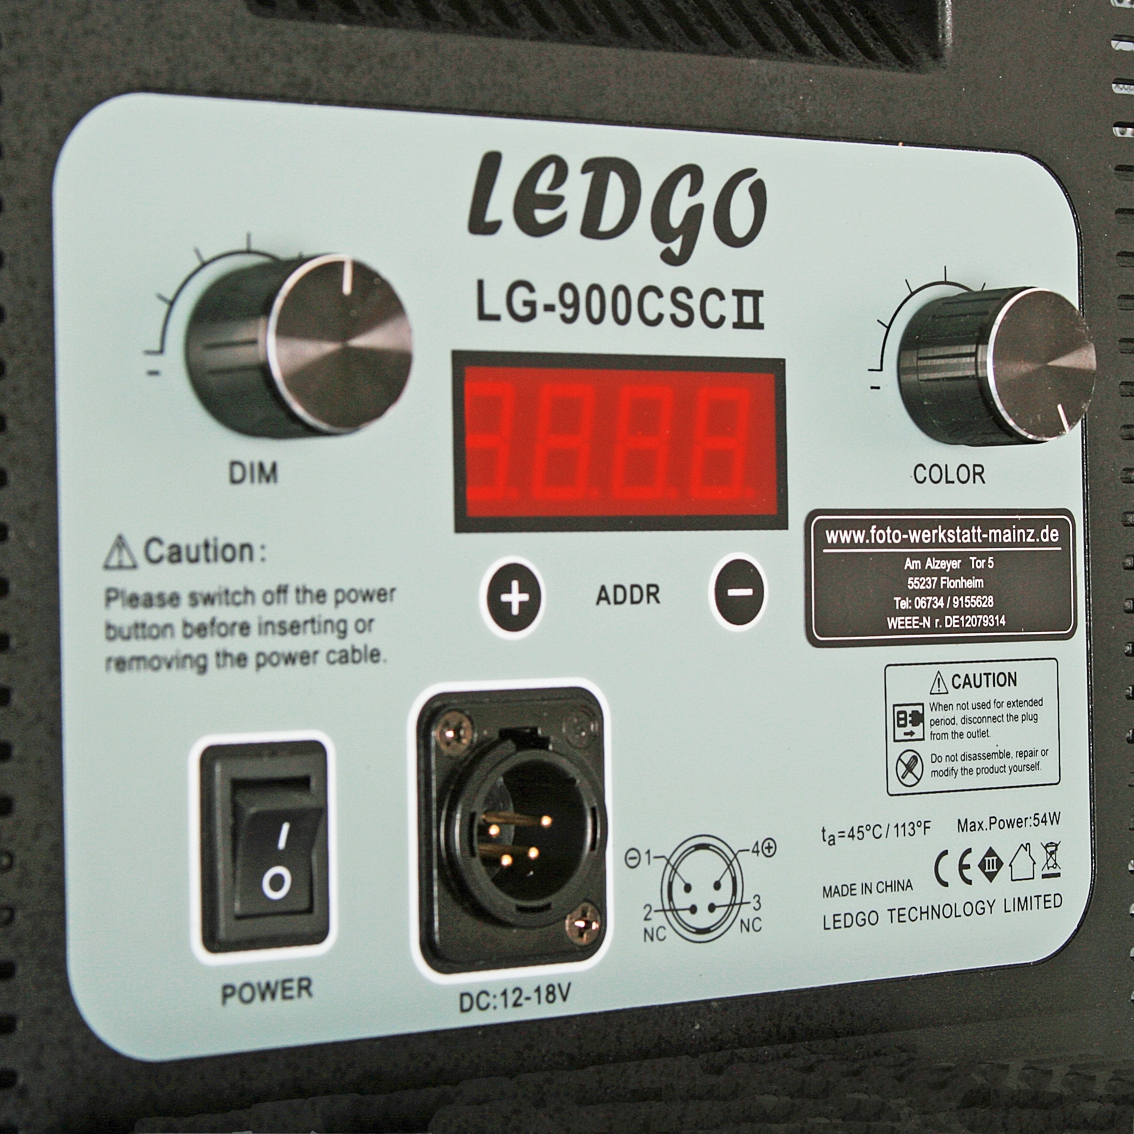 LEDGO LG-900CSCII Digital Bi-Color LED Leuchte mit Digitaldisplay und V-Mount Akku Adapter